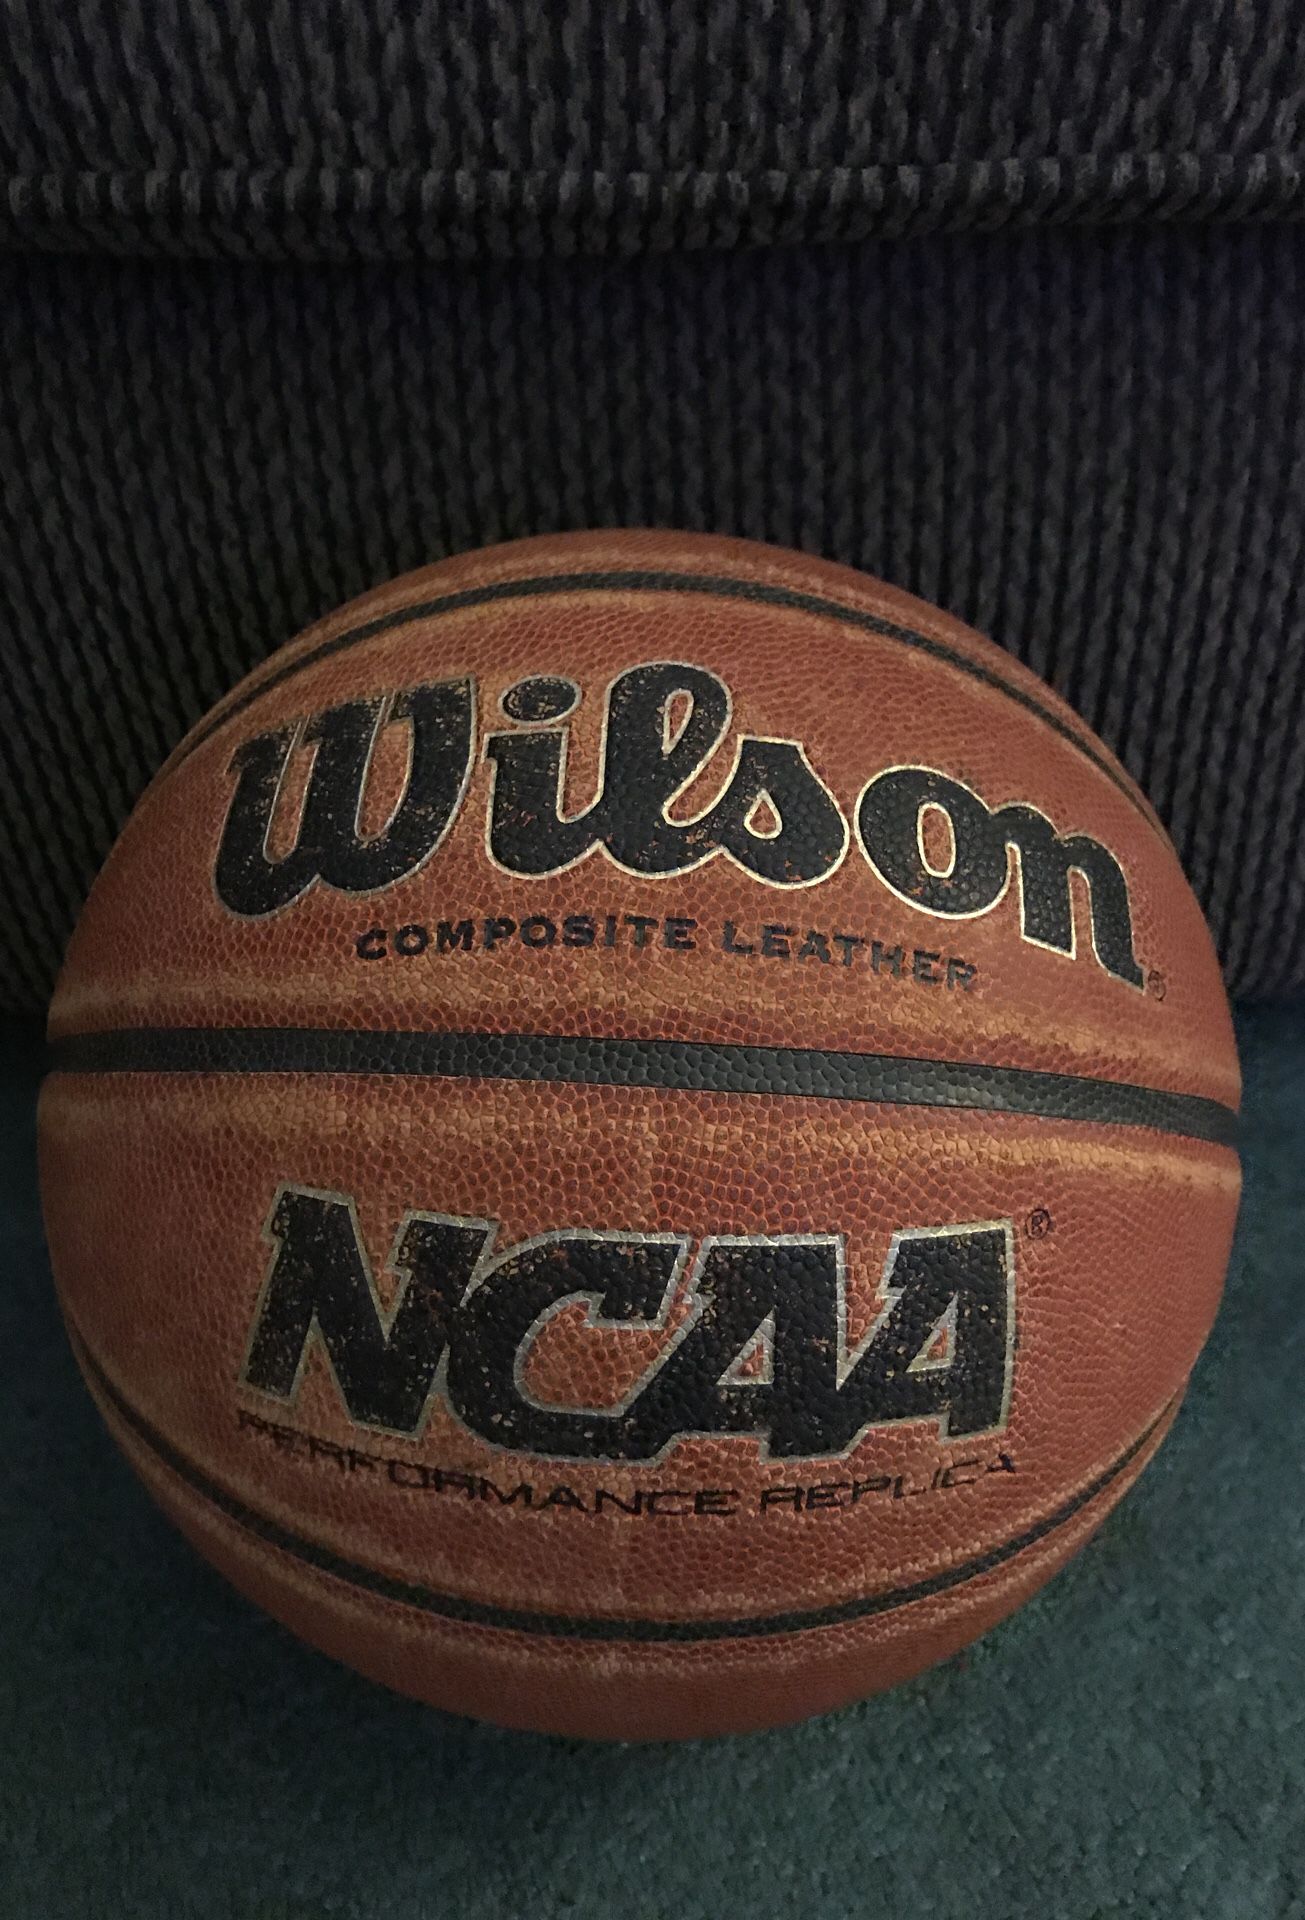 Wilson used basketball size 28.5